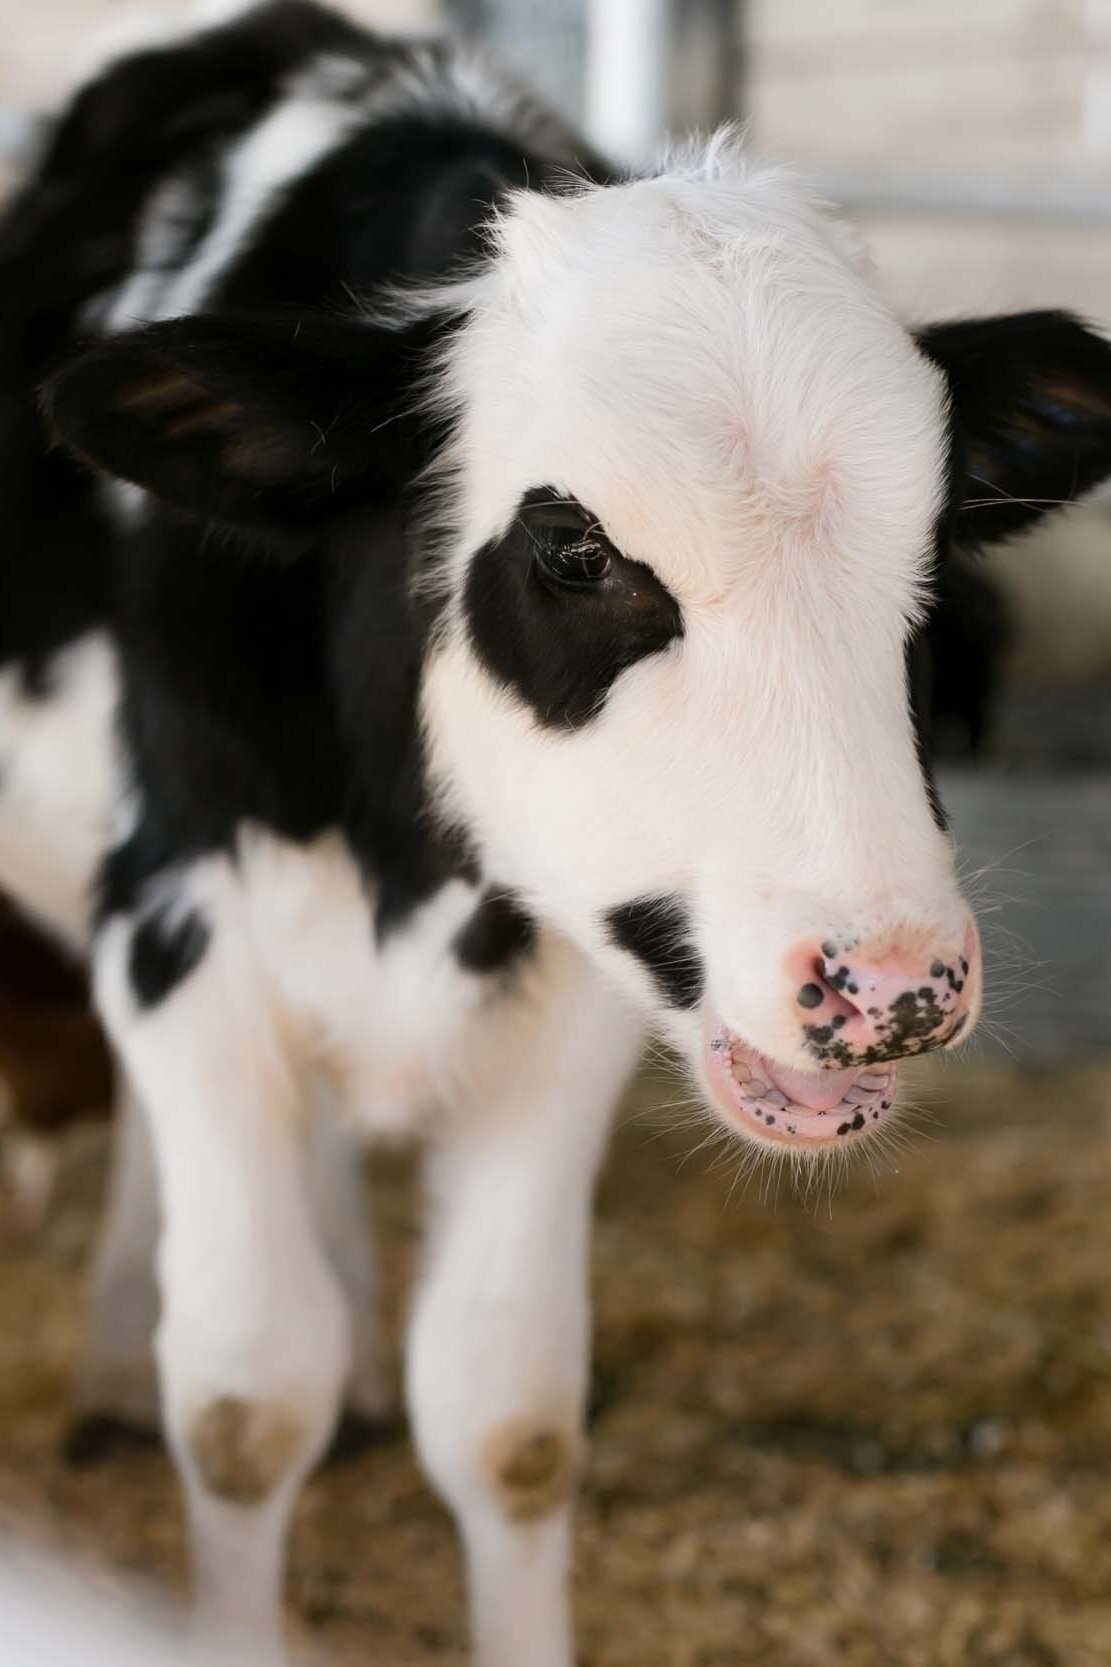 Closeup of Cow in Barn